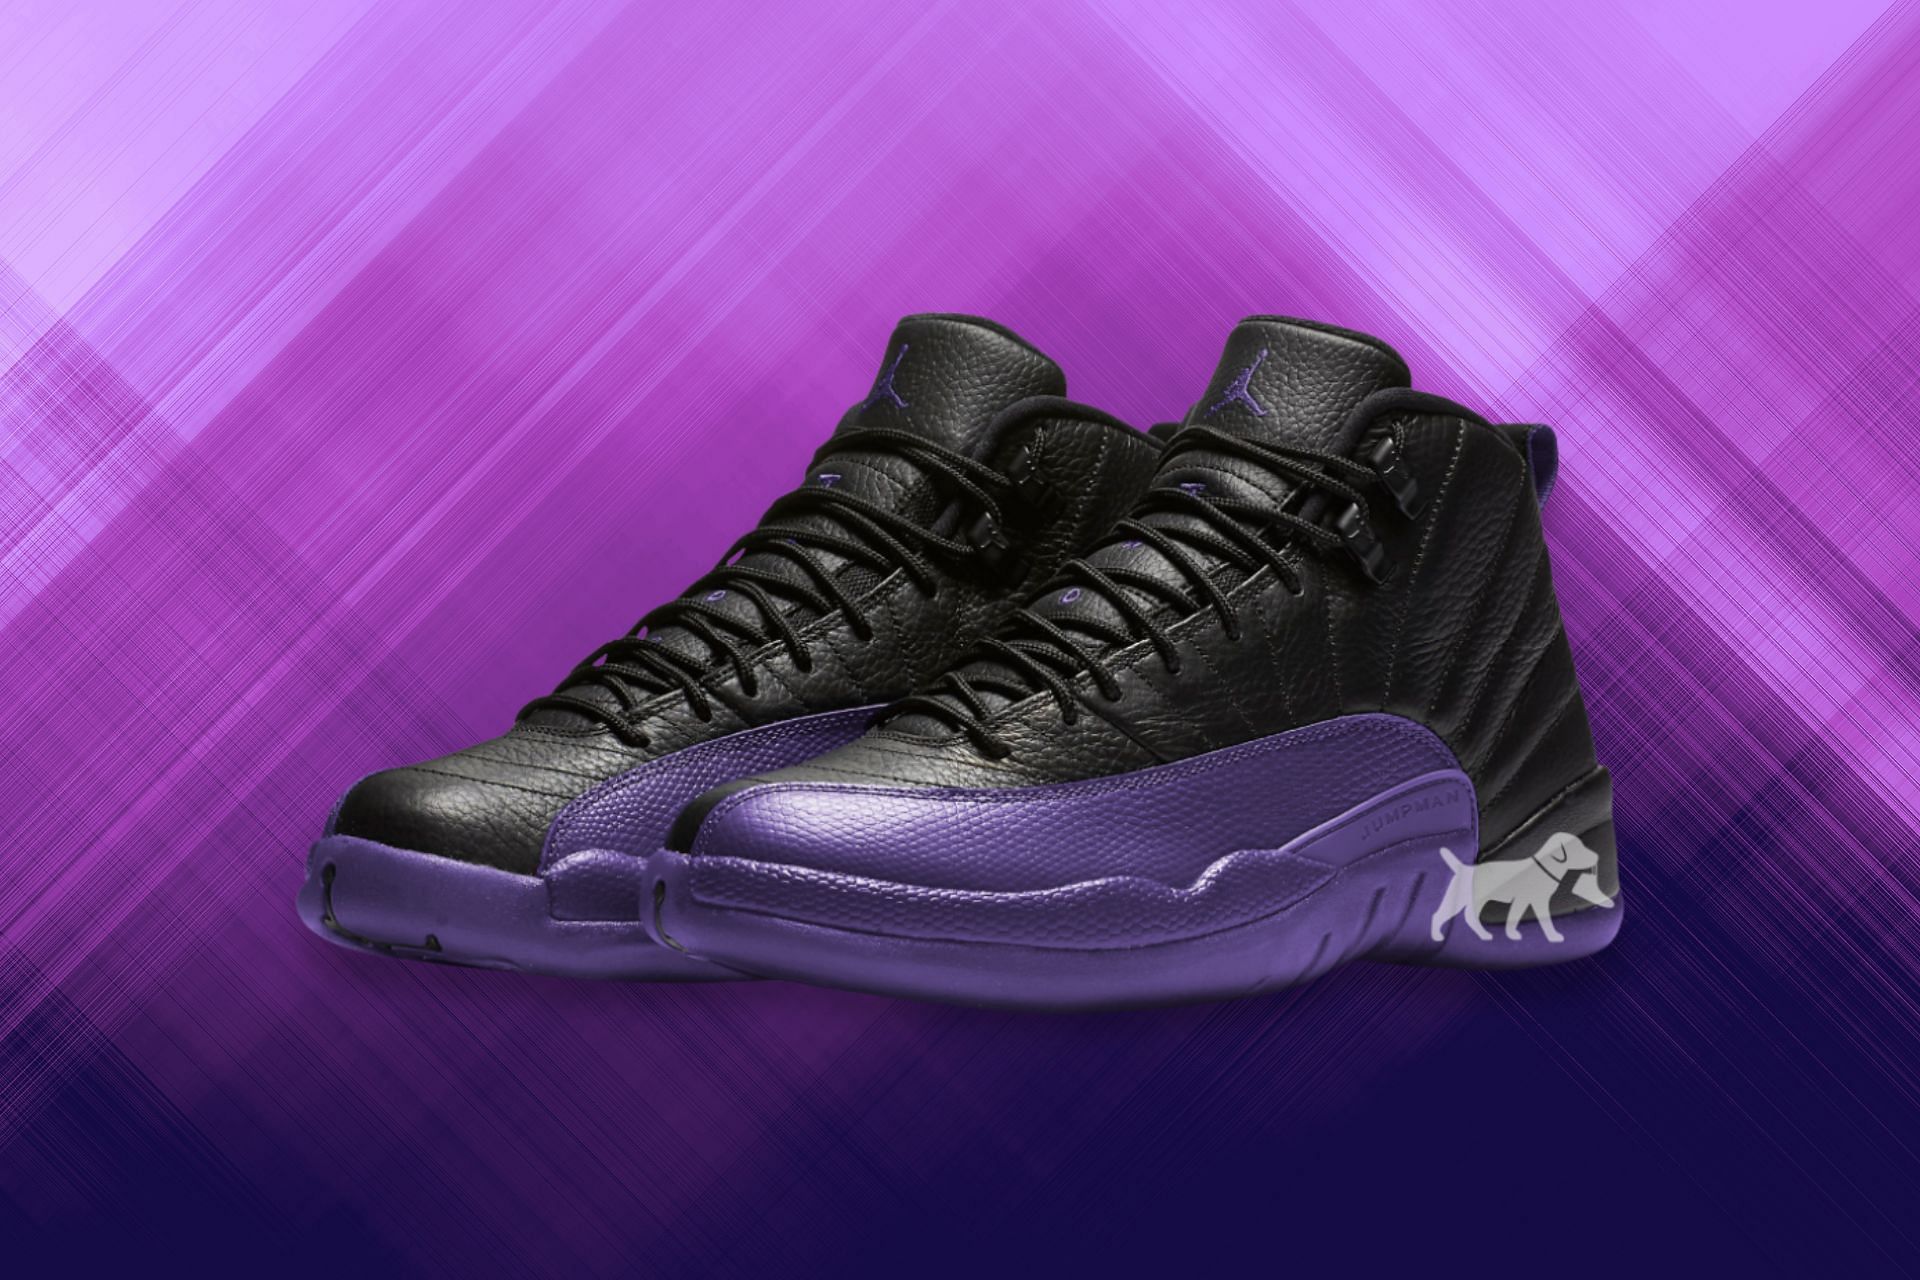 The Air Jordan 12 Field Purple Drops August 12 - Sneaker News